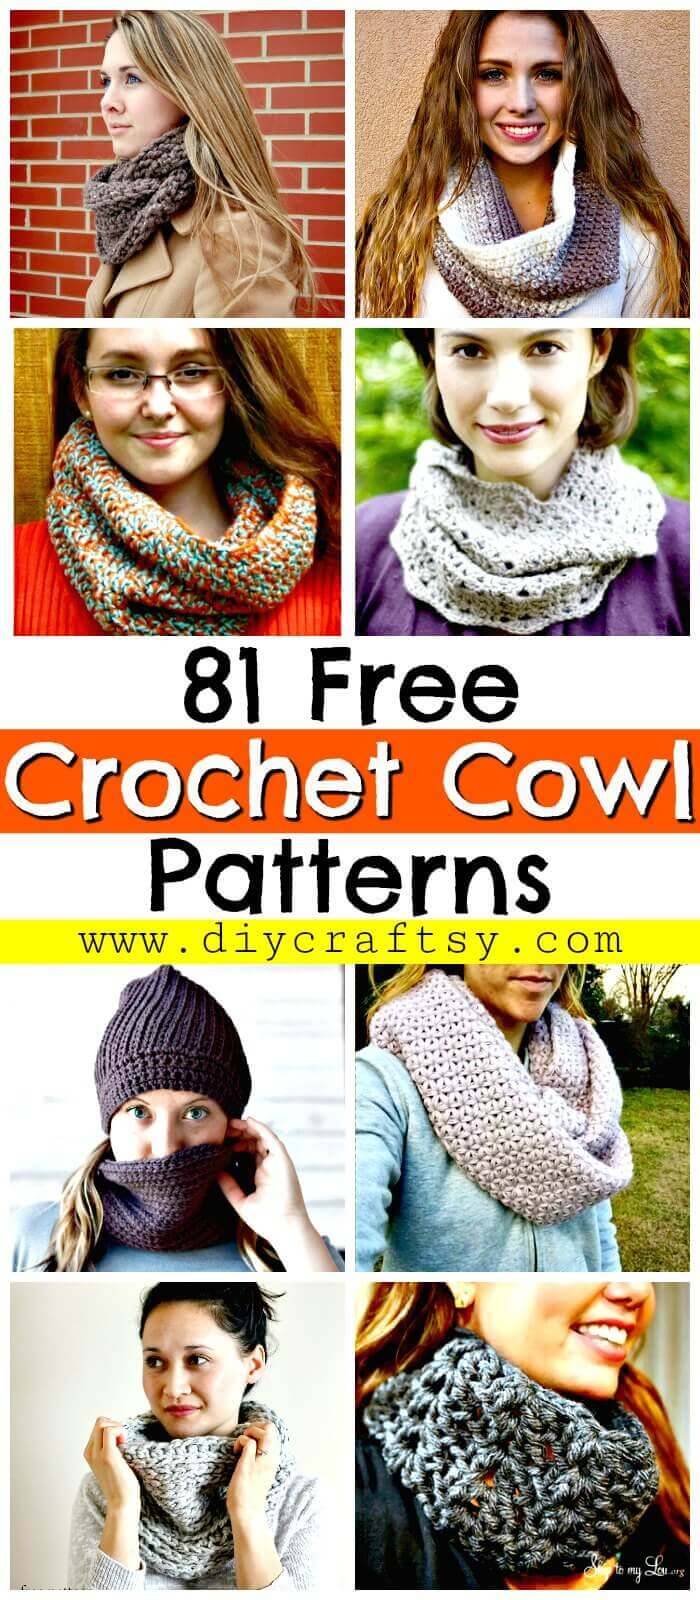 Crochet Cowl Patterns - DIY Crafts - Free Crochet Patterns - Crochet Infinity Scarf